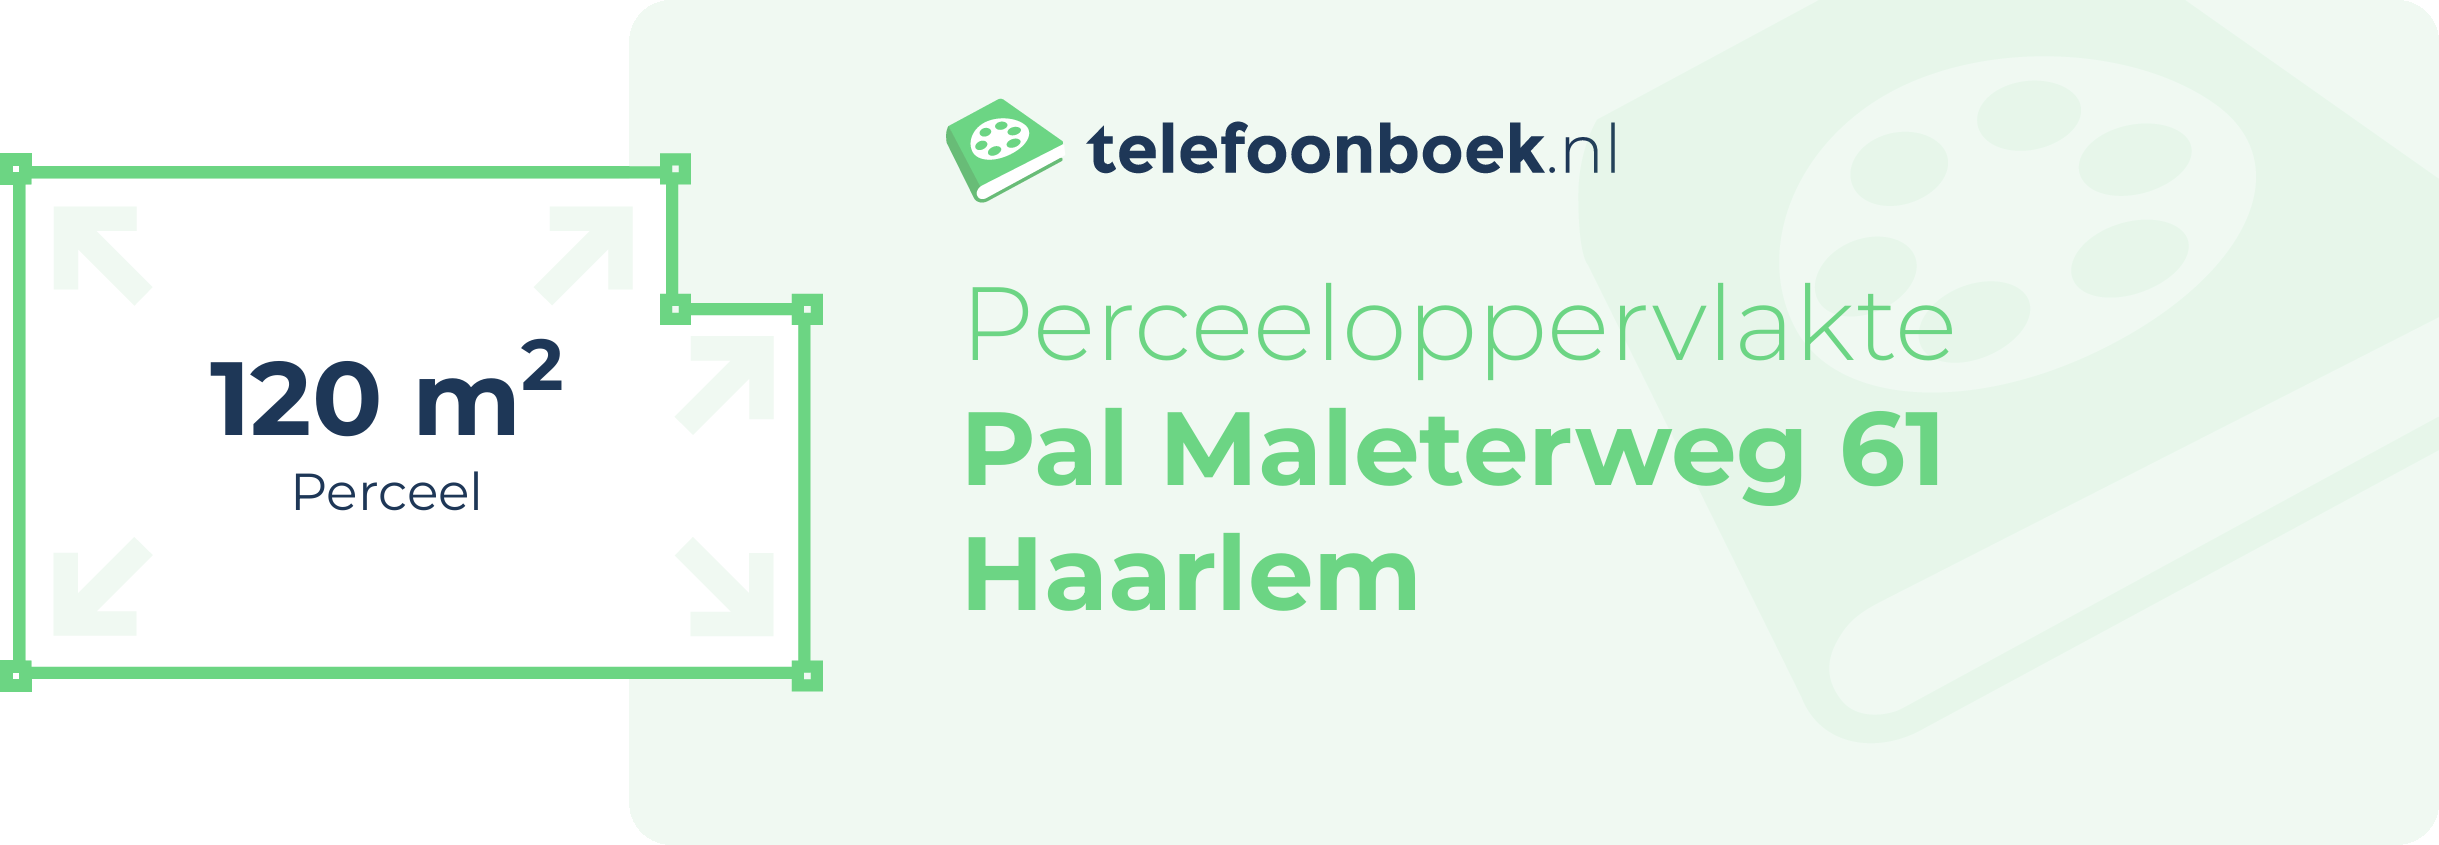 Perceeloppervlakte Pal Maleterweg 61 Haarlem